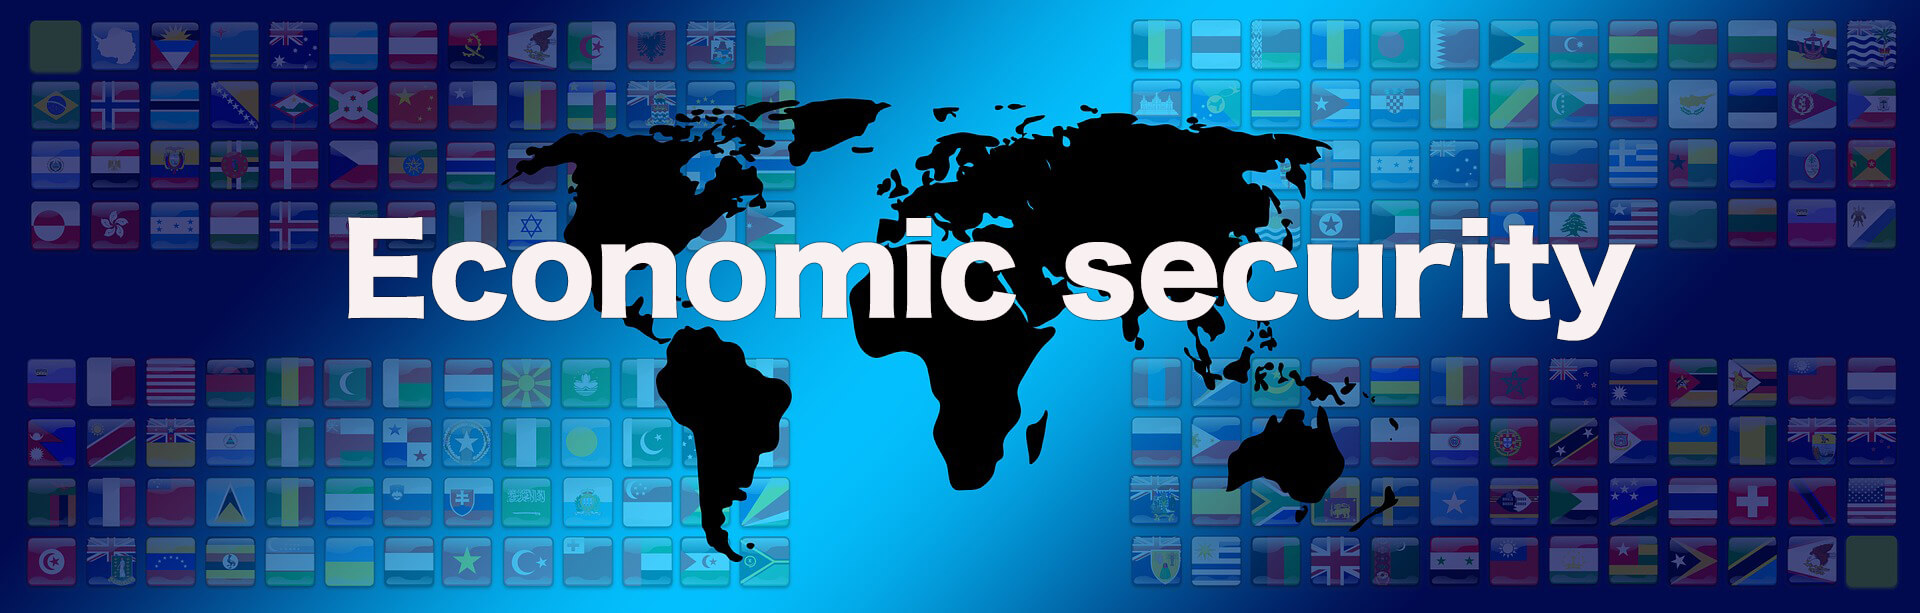 economic security_経済安全保障 (1)